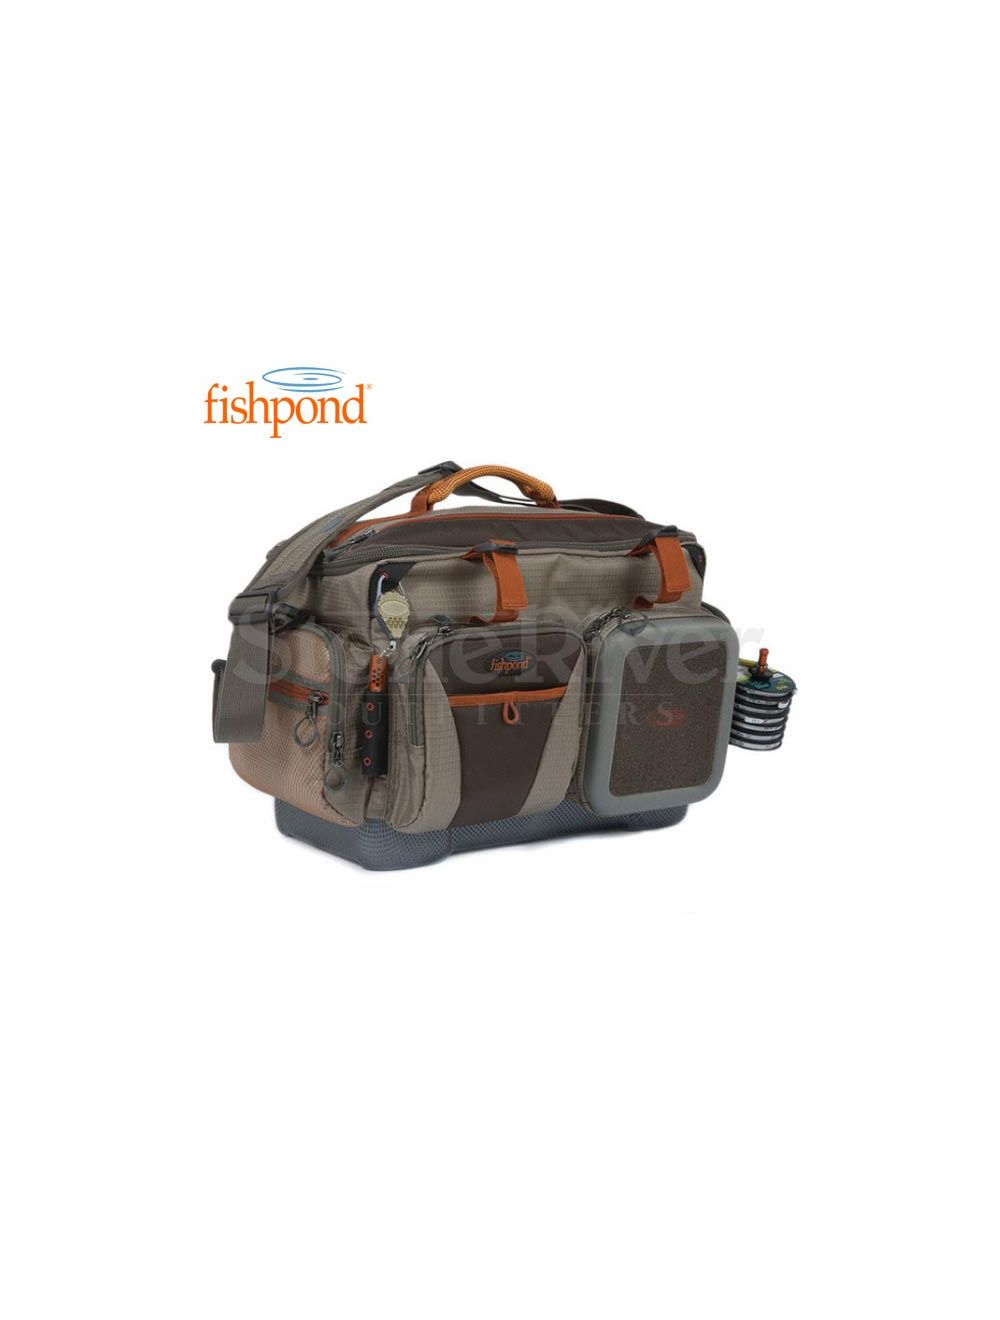 Fishpond Green River Gear Bag